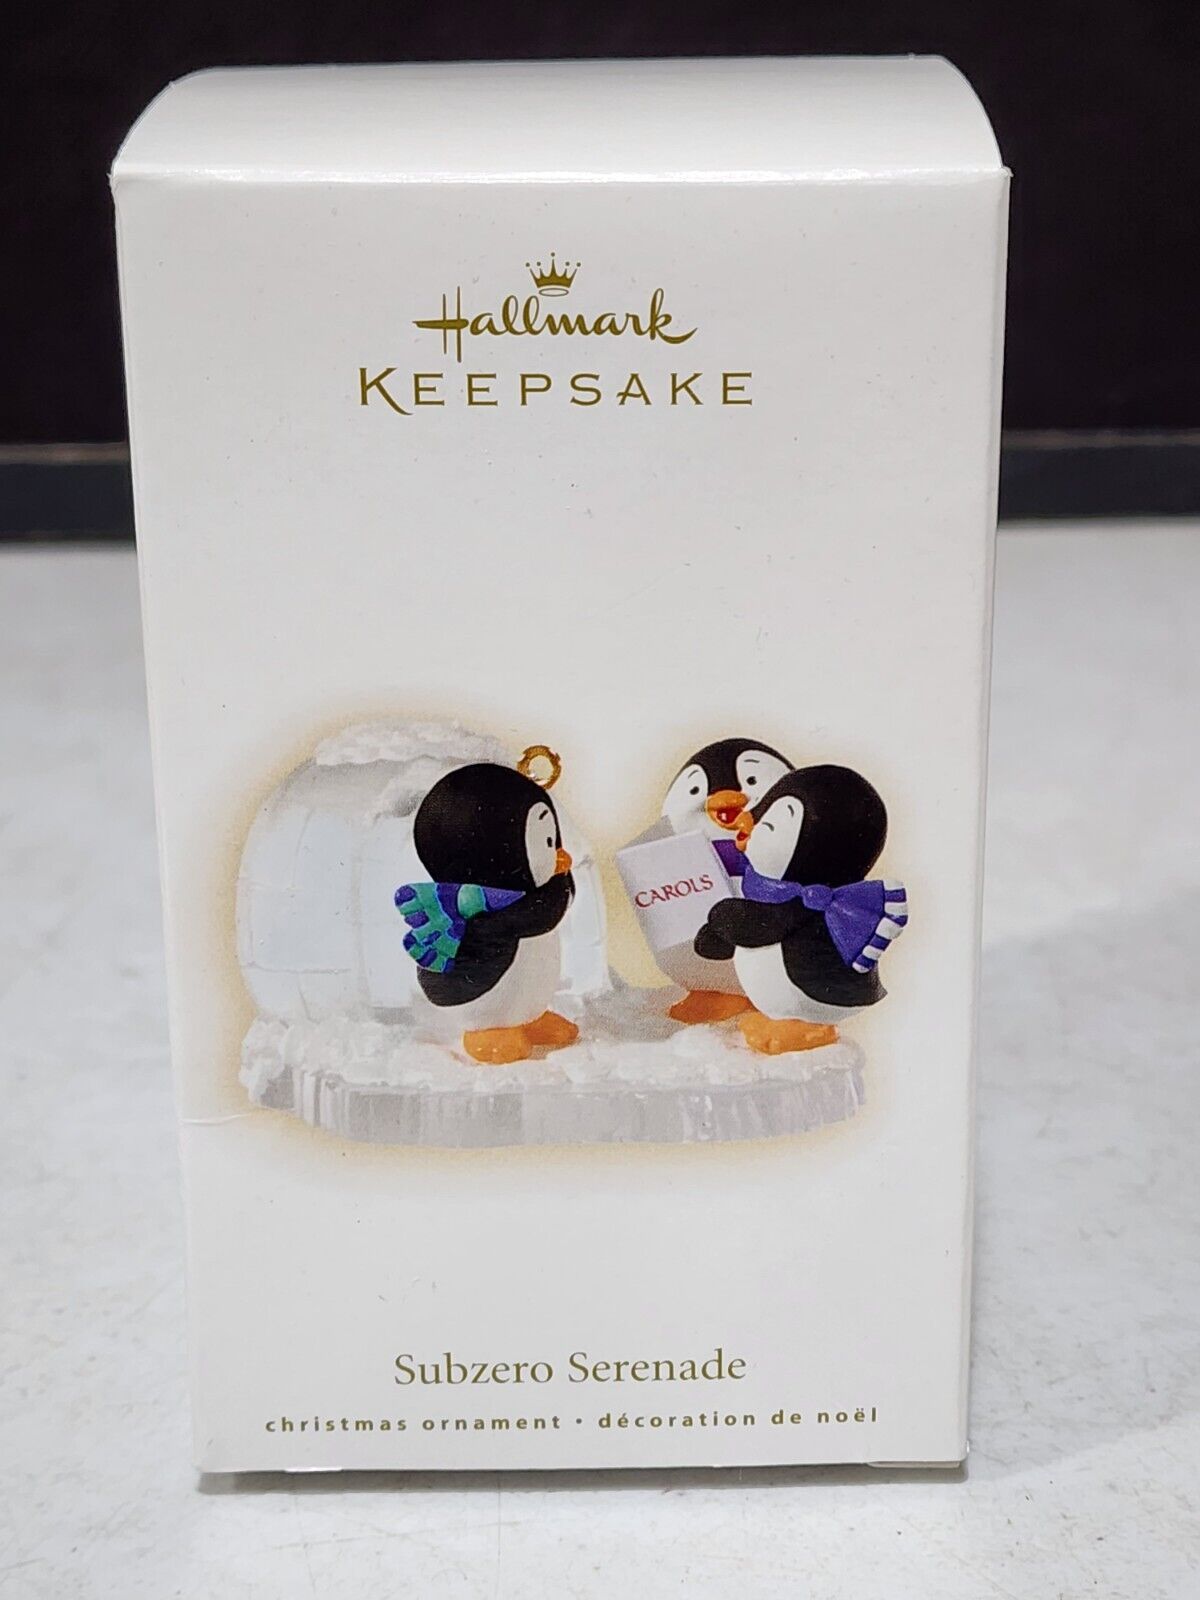 2009 Hallmark Keepsake Subzero Serenade Ornament Penguins Playing